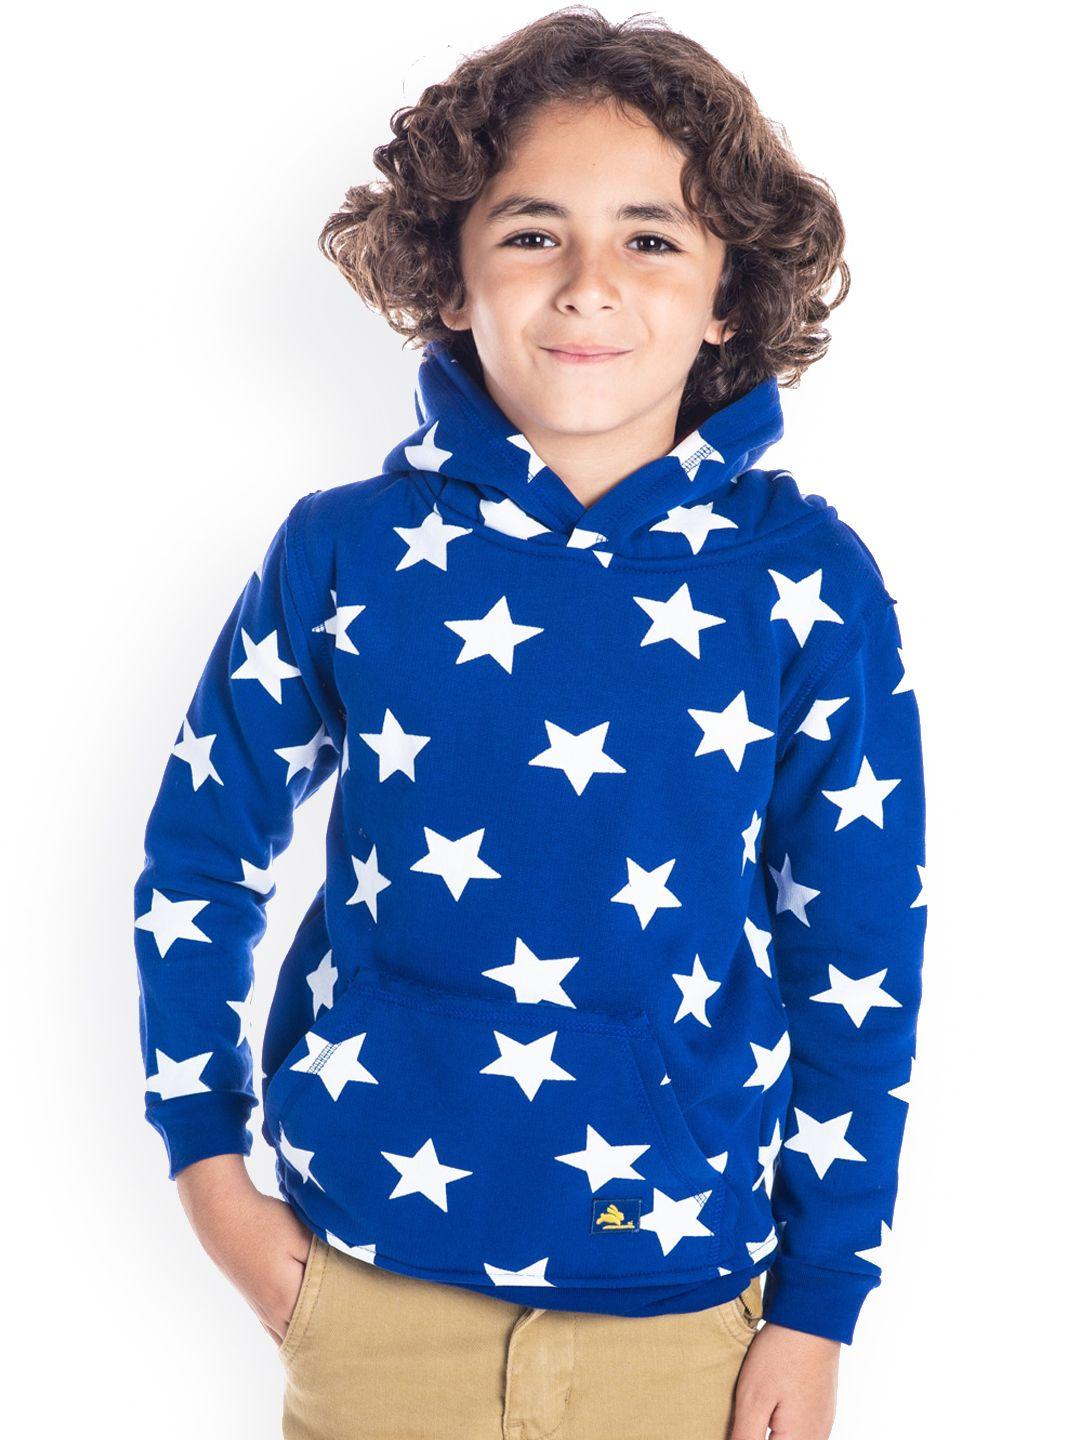 cherry crumble unisex kids blue star printed hooded sweatshirt